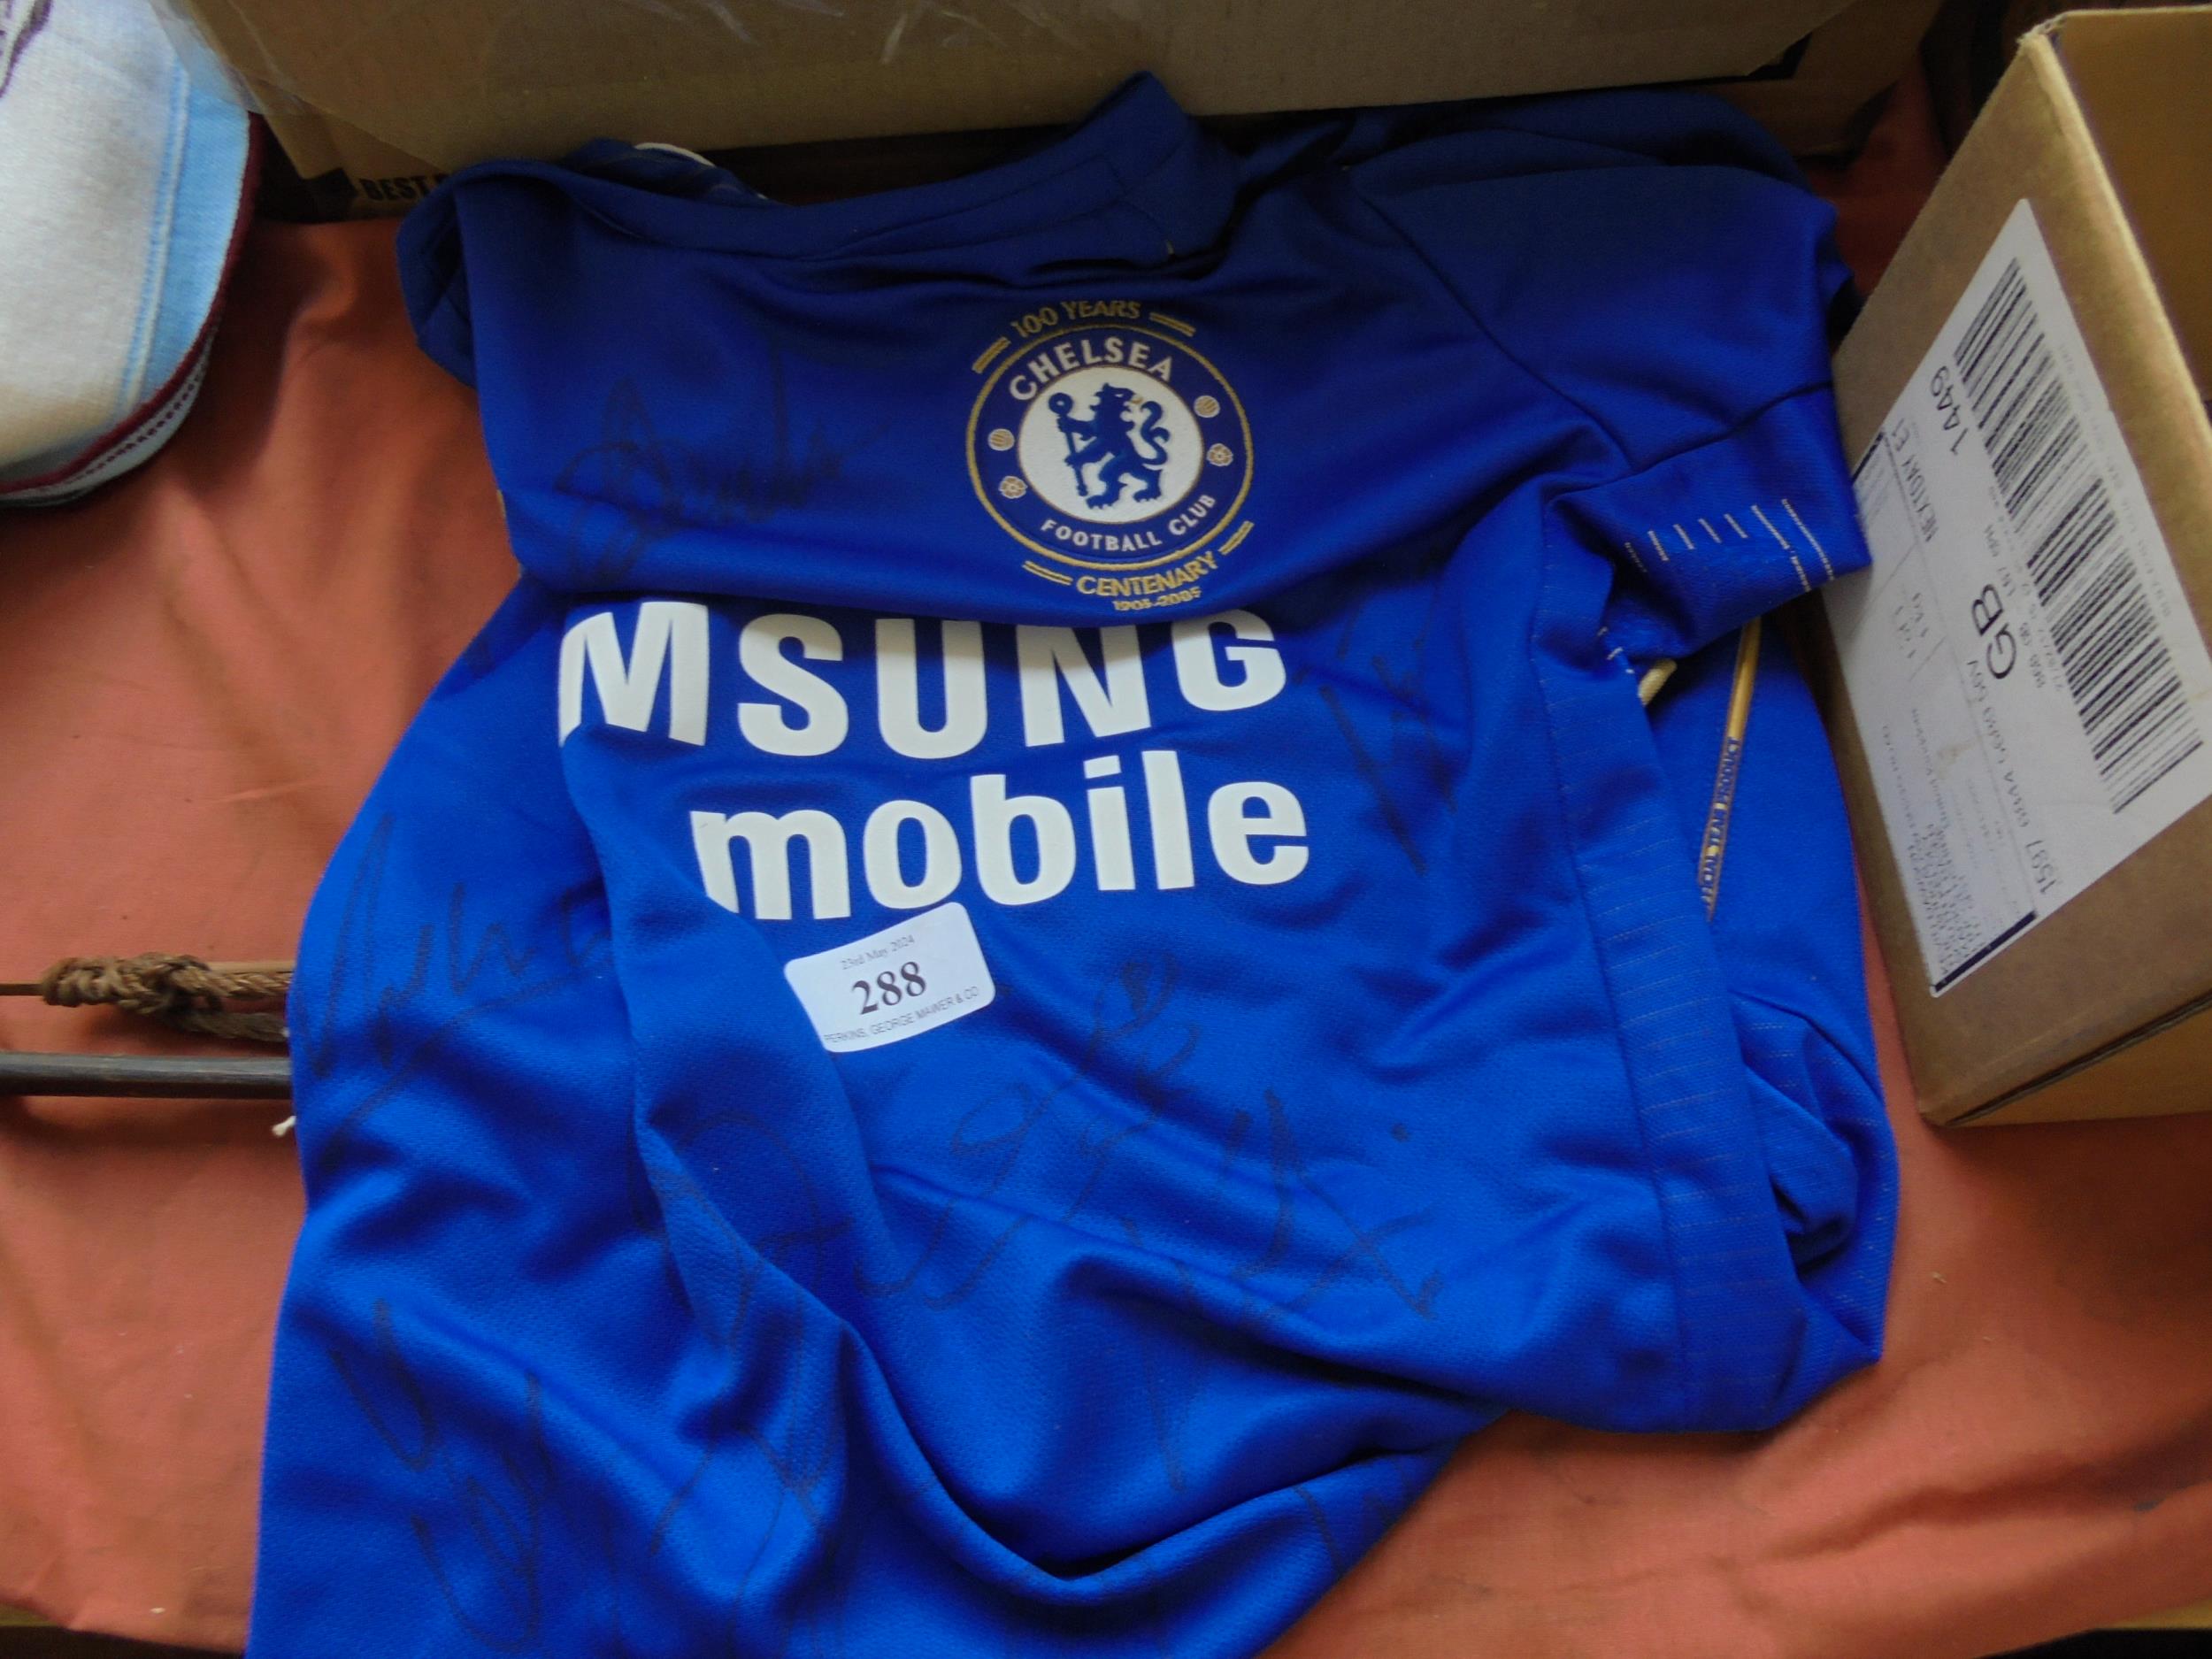 Chelsea Football Club shirt,